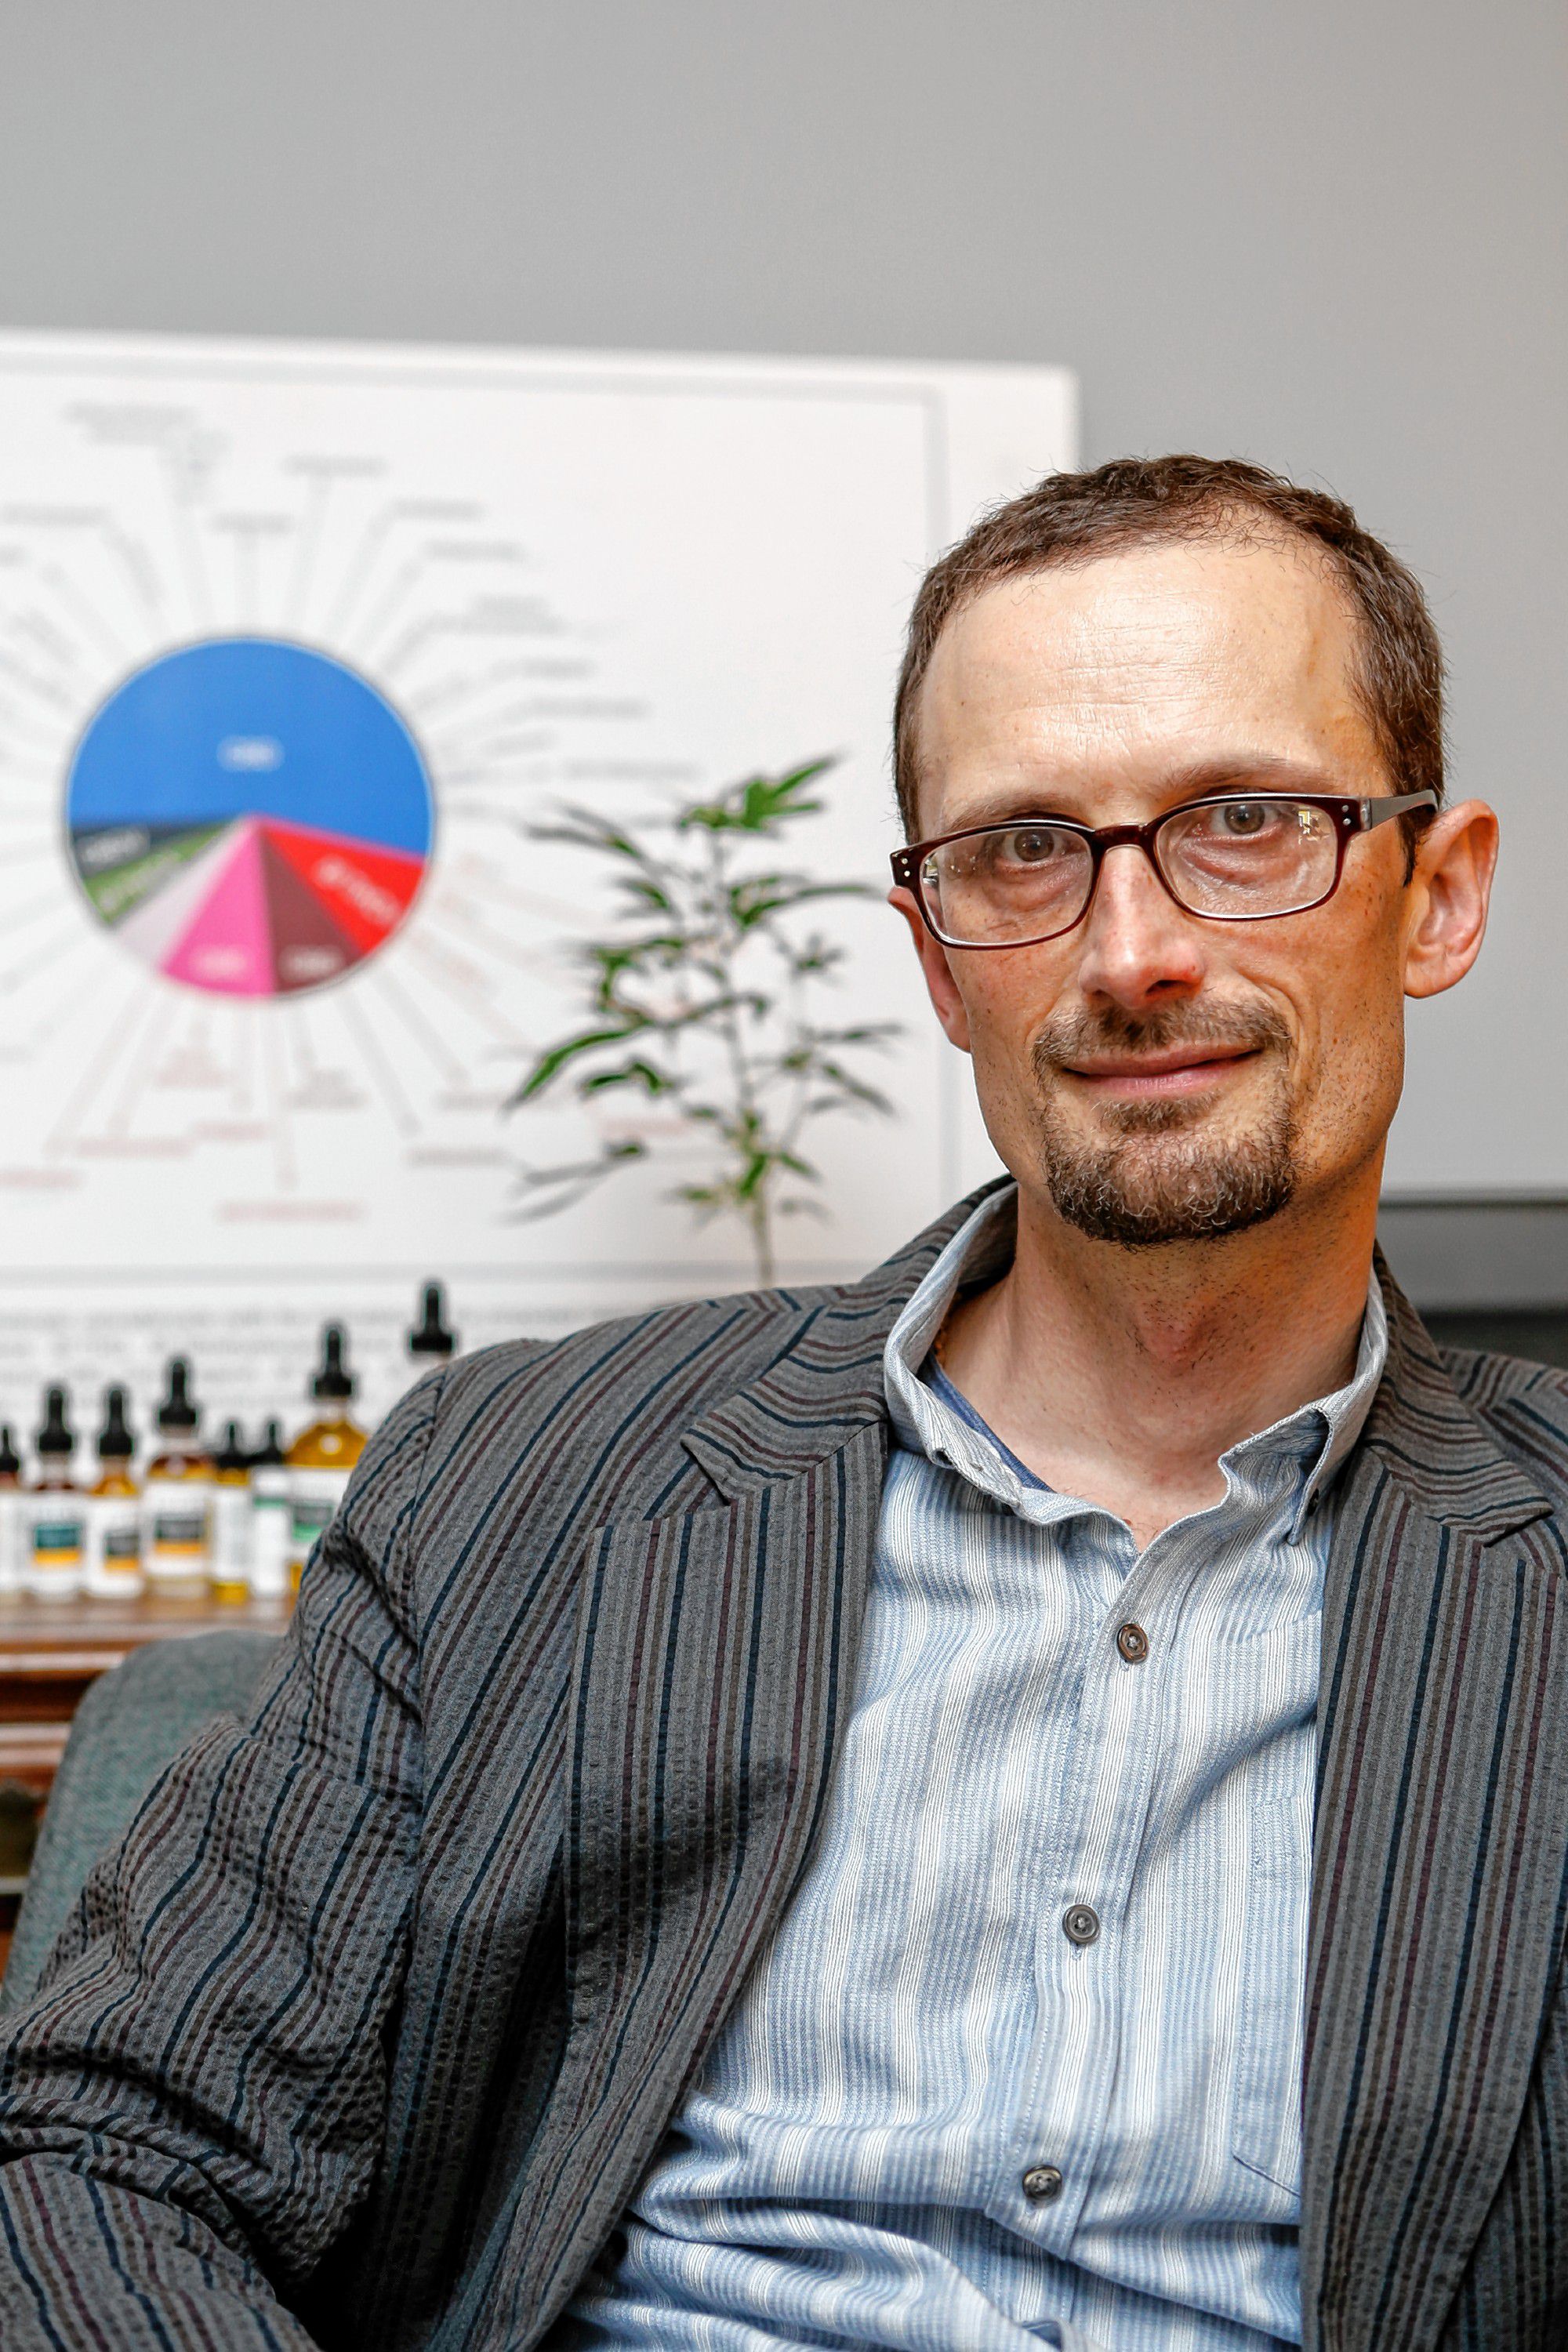 Cannabis Consultant Ezra Parzybok Talks Marijuana as Medicine in New Book